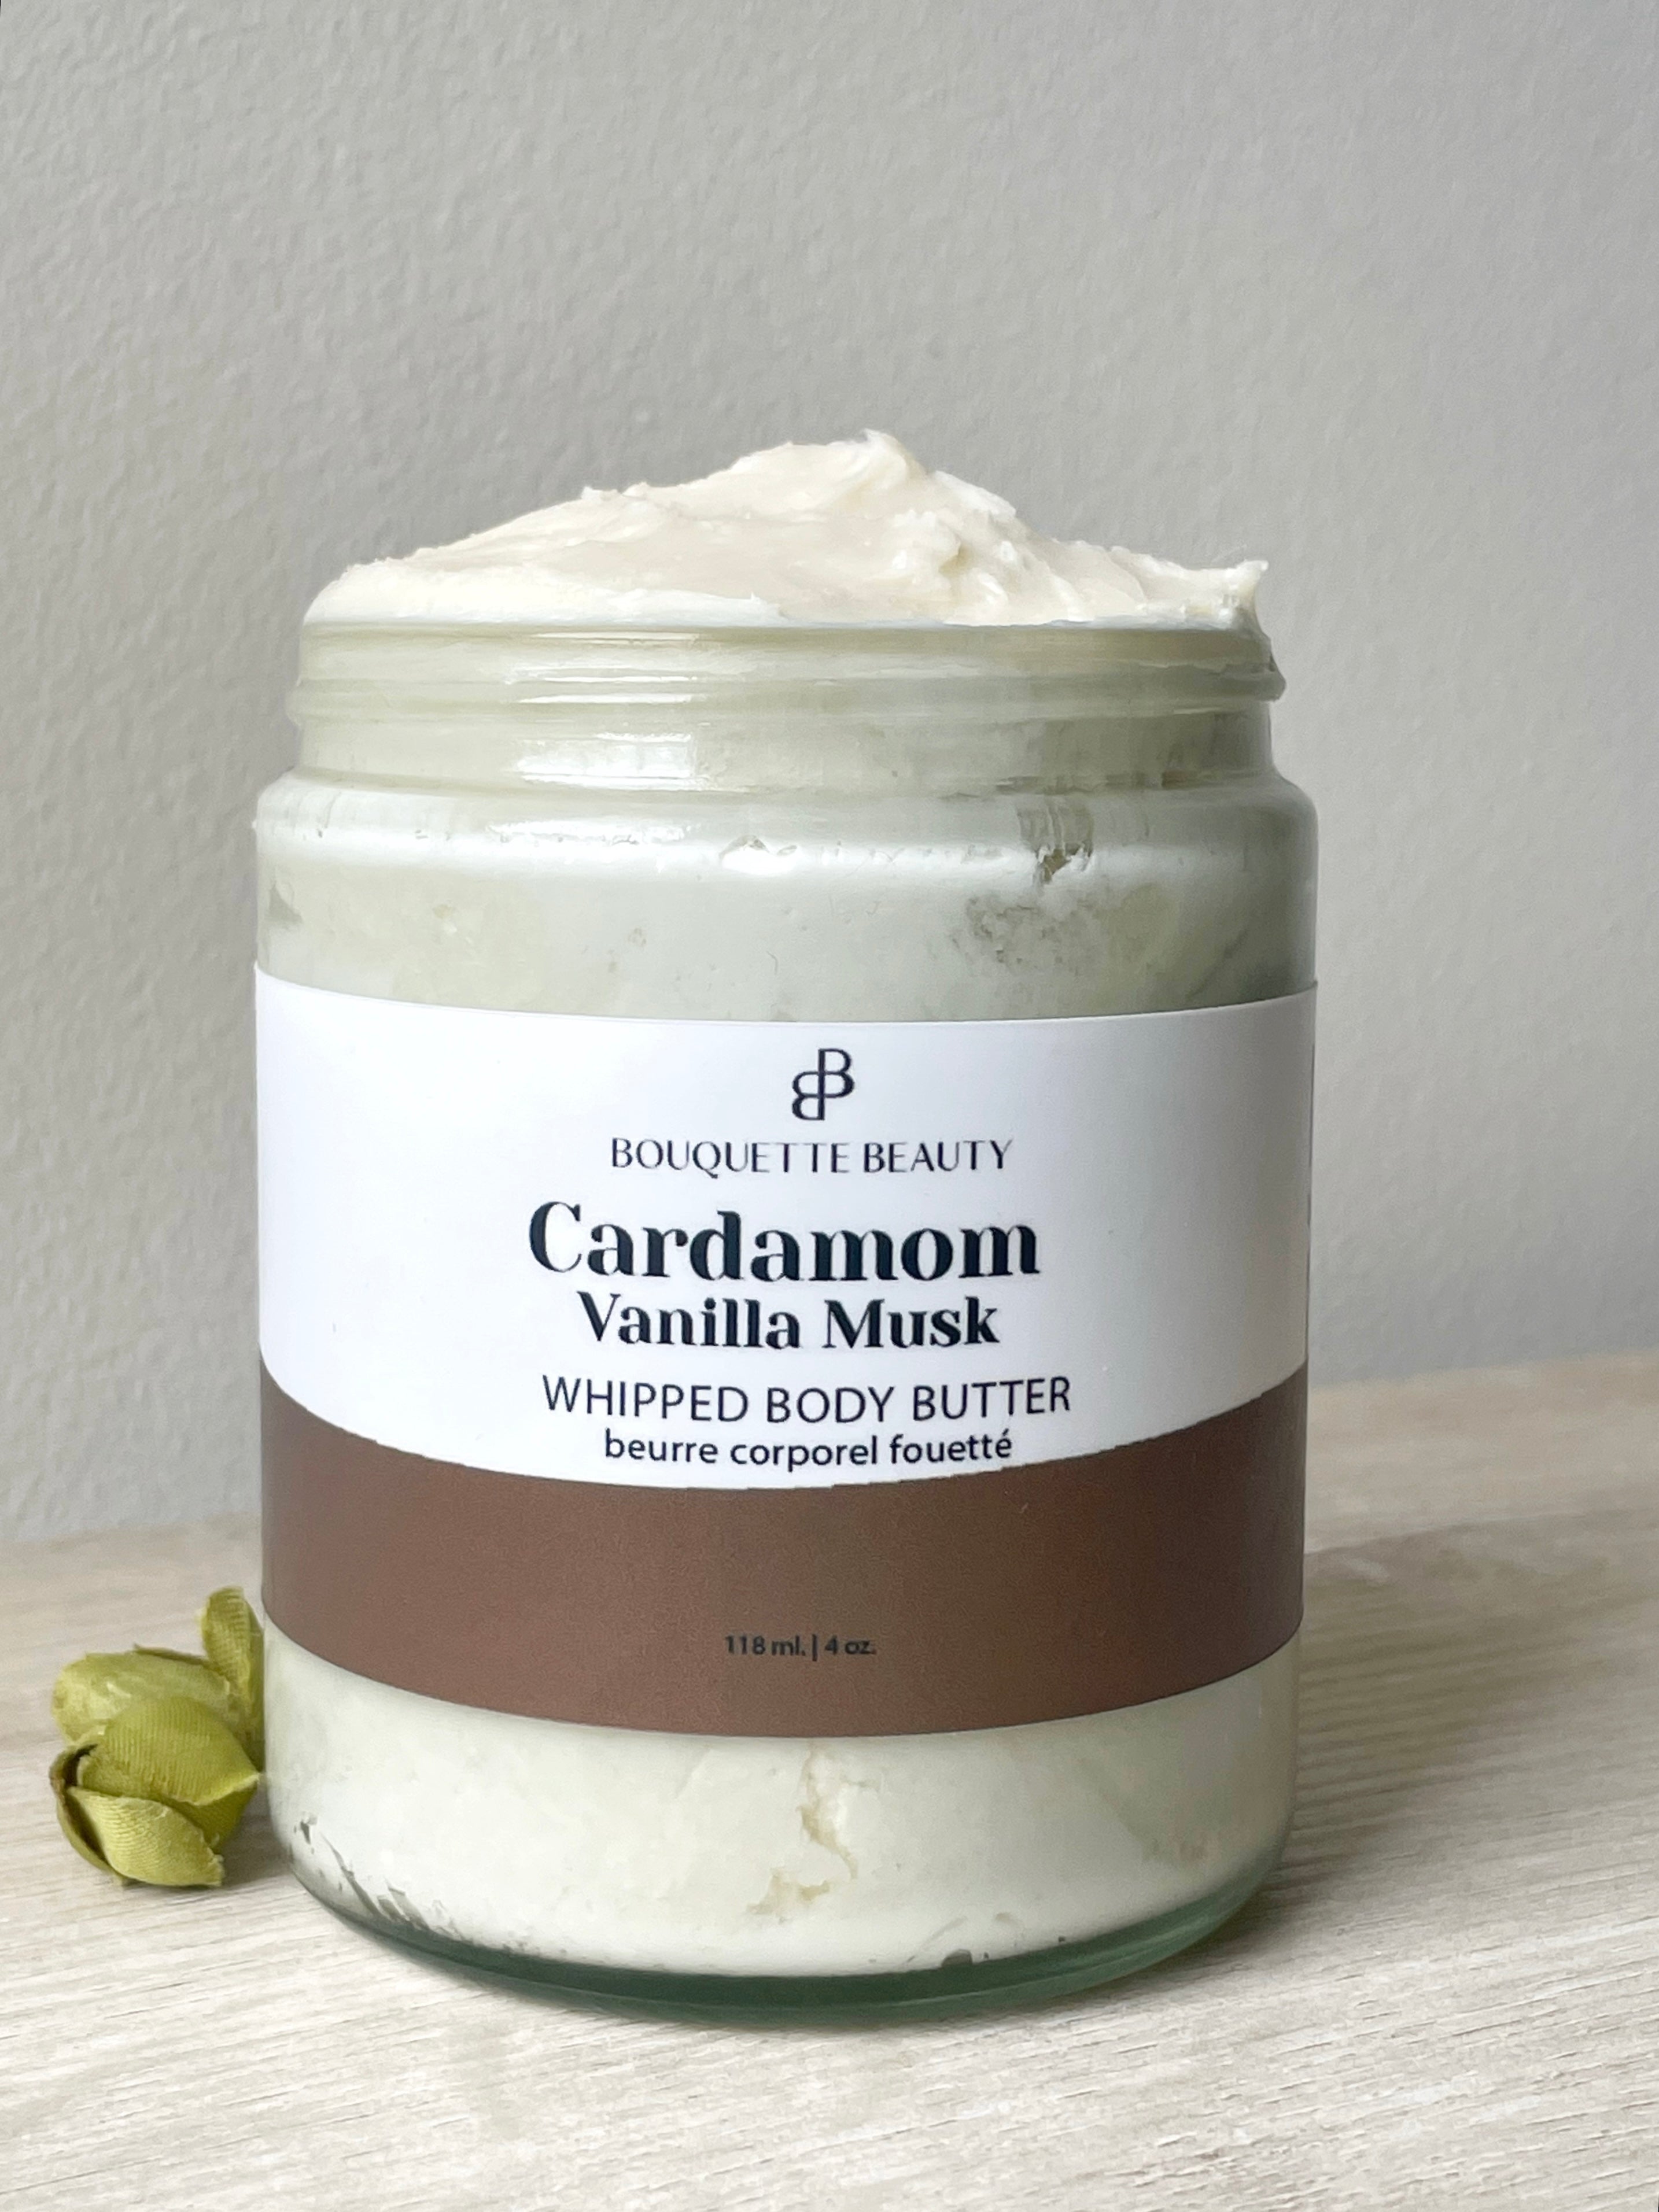 Cardamom Vanilla Musk Body Butter